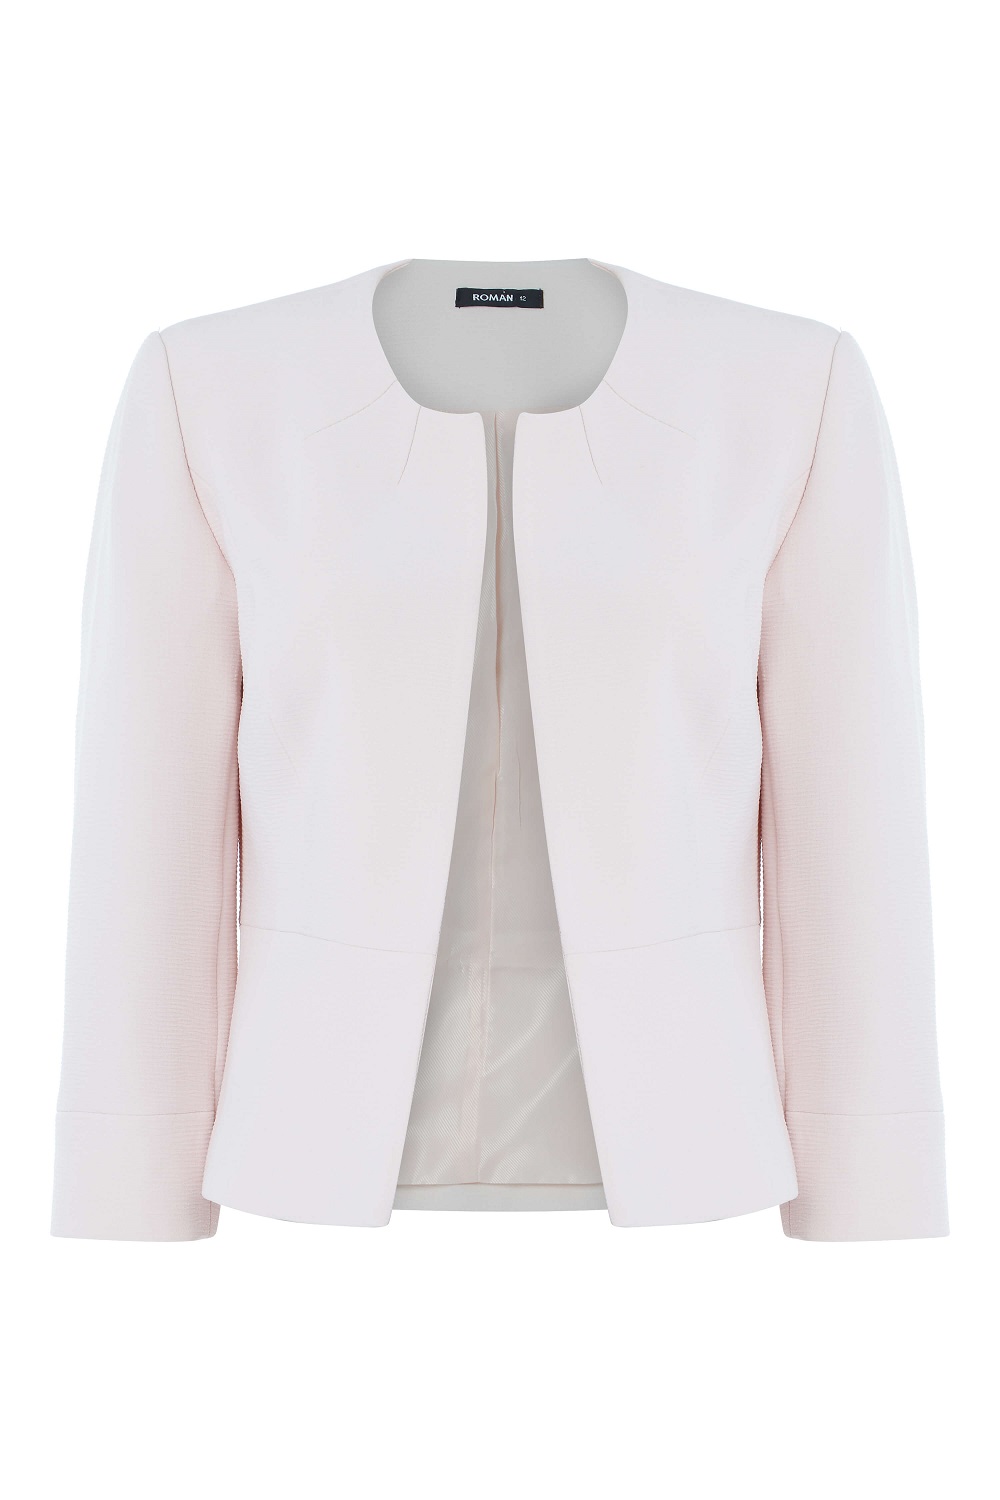 Tailored Jacquard Jacket in Light Pink - Roman Originals UK